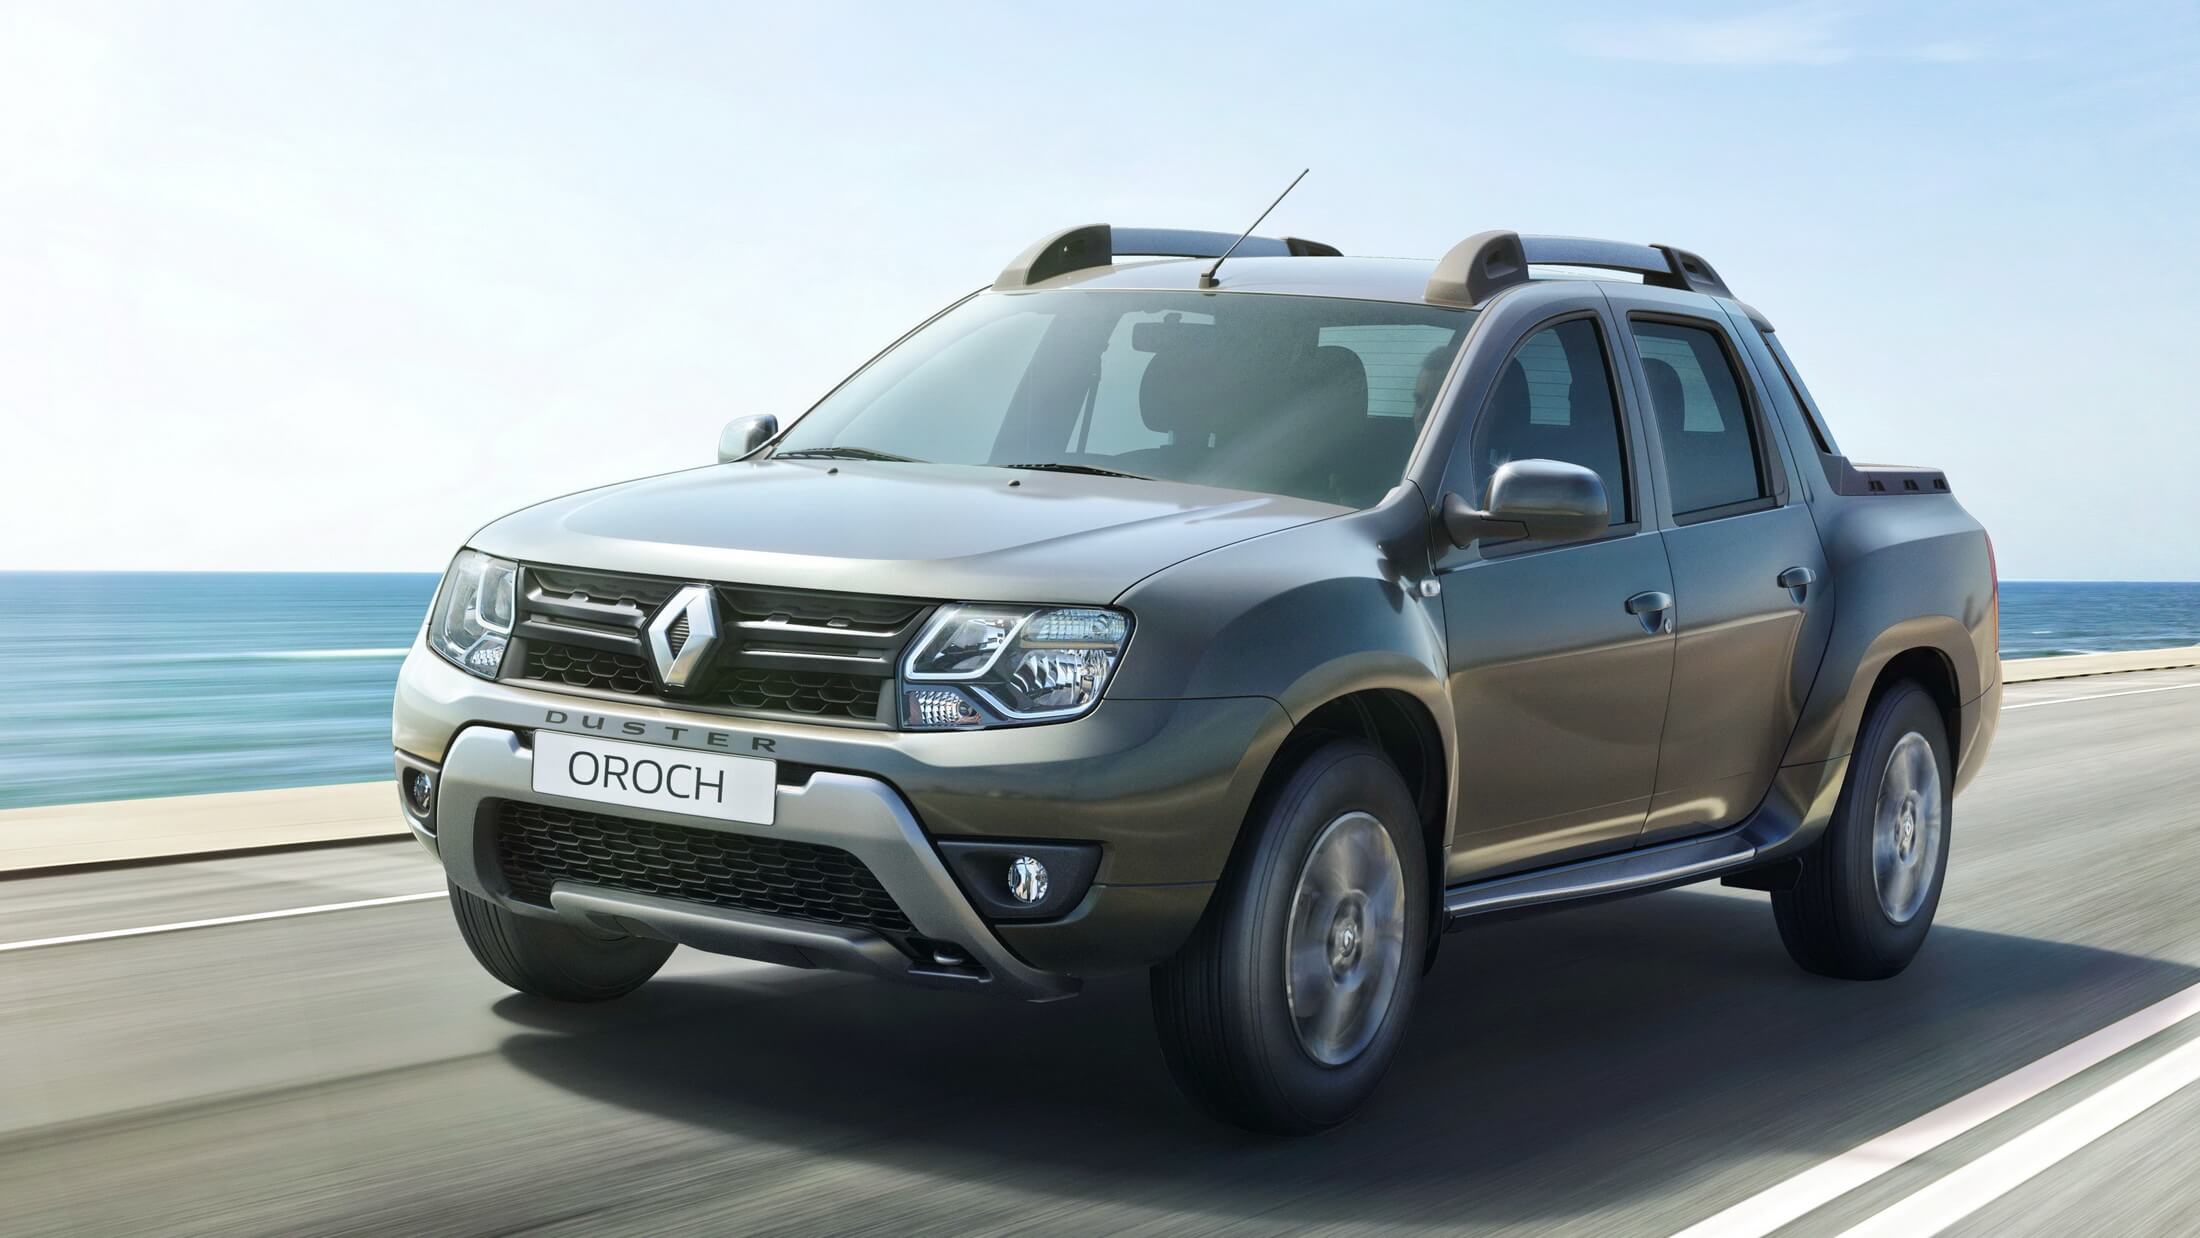 H Dacia ετοιμάζει ένα Duster pickup και για την Ευρώπη